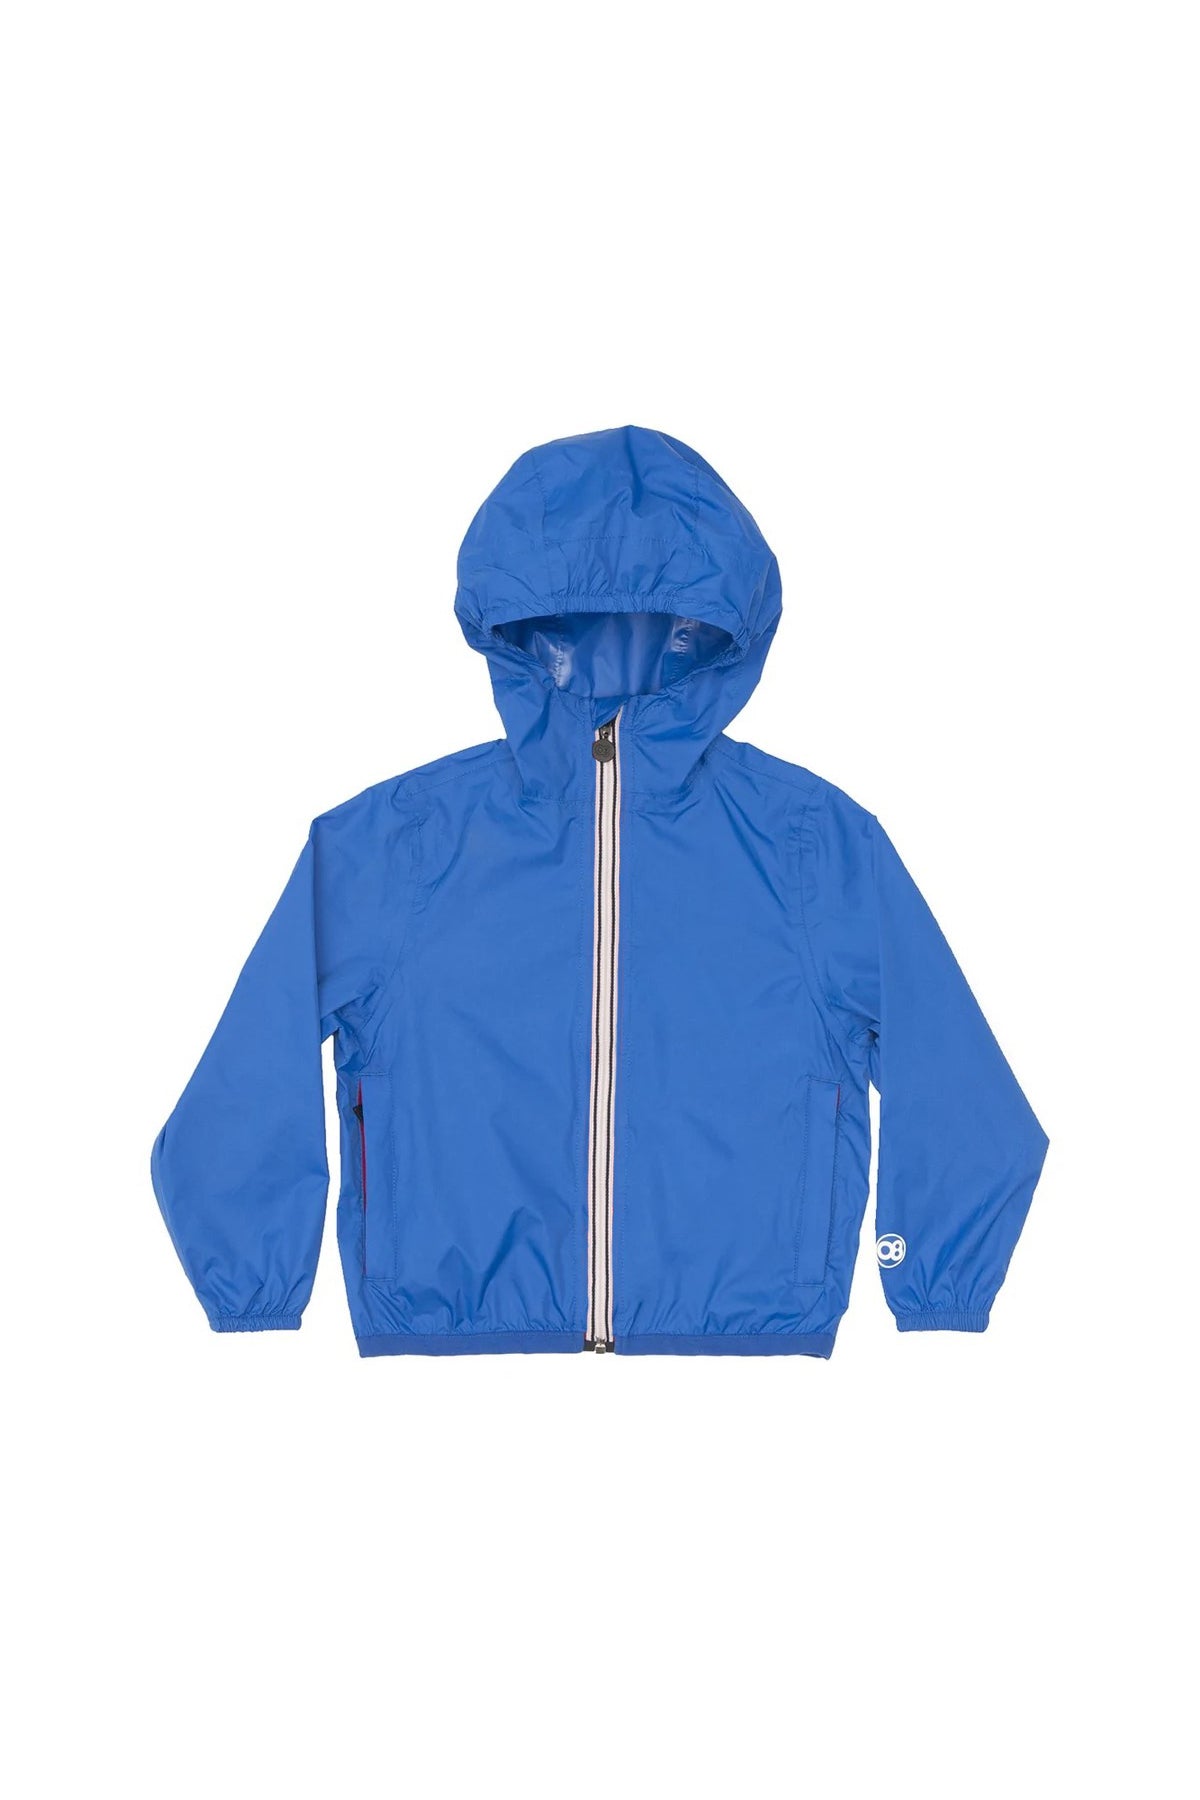 Kids royal blue full zip packable rain jacket and windbreaker